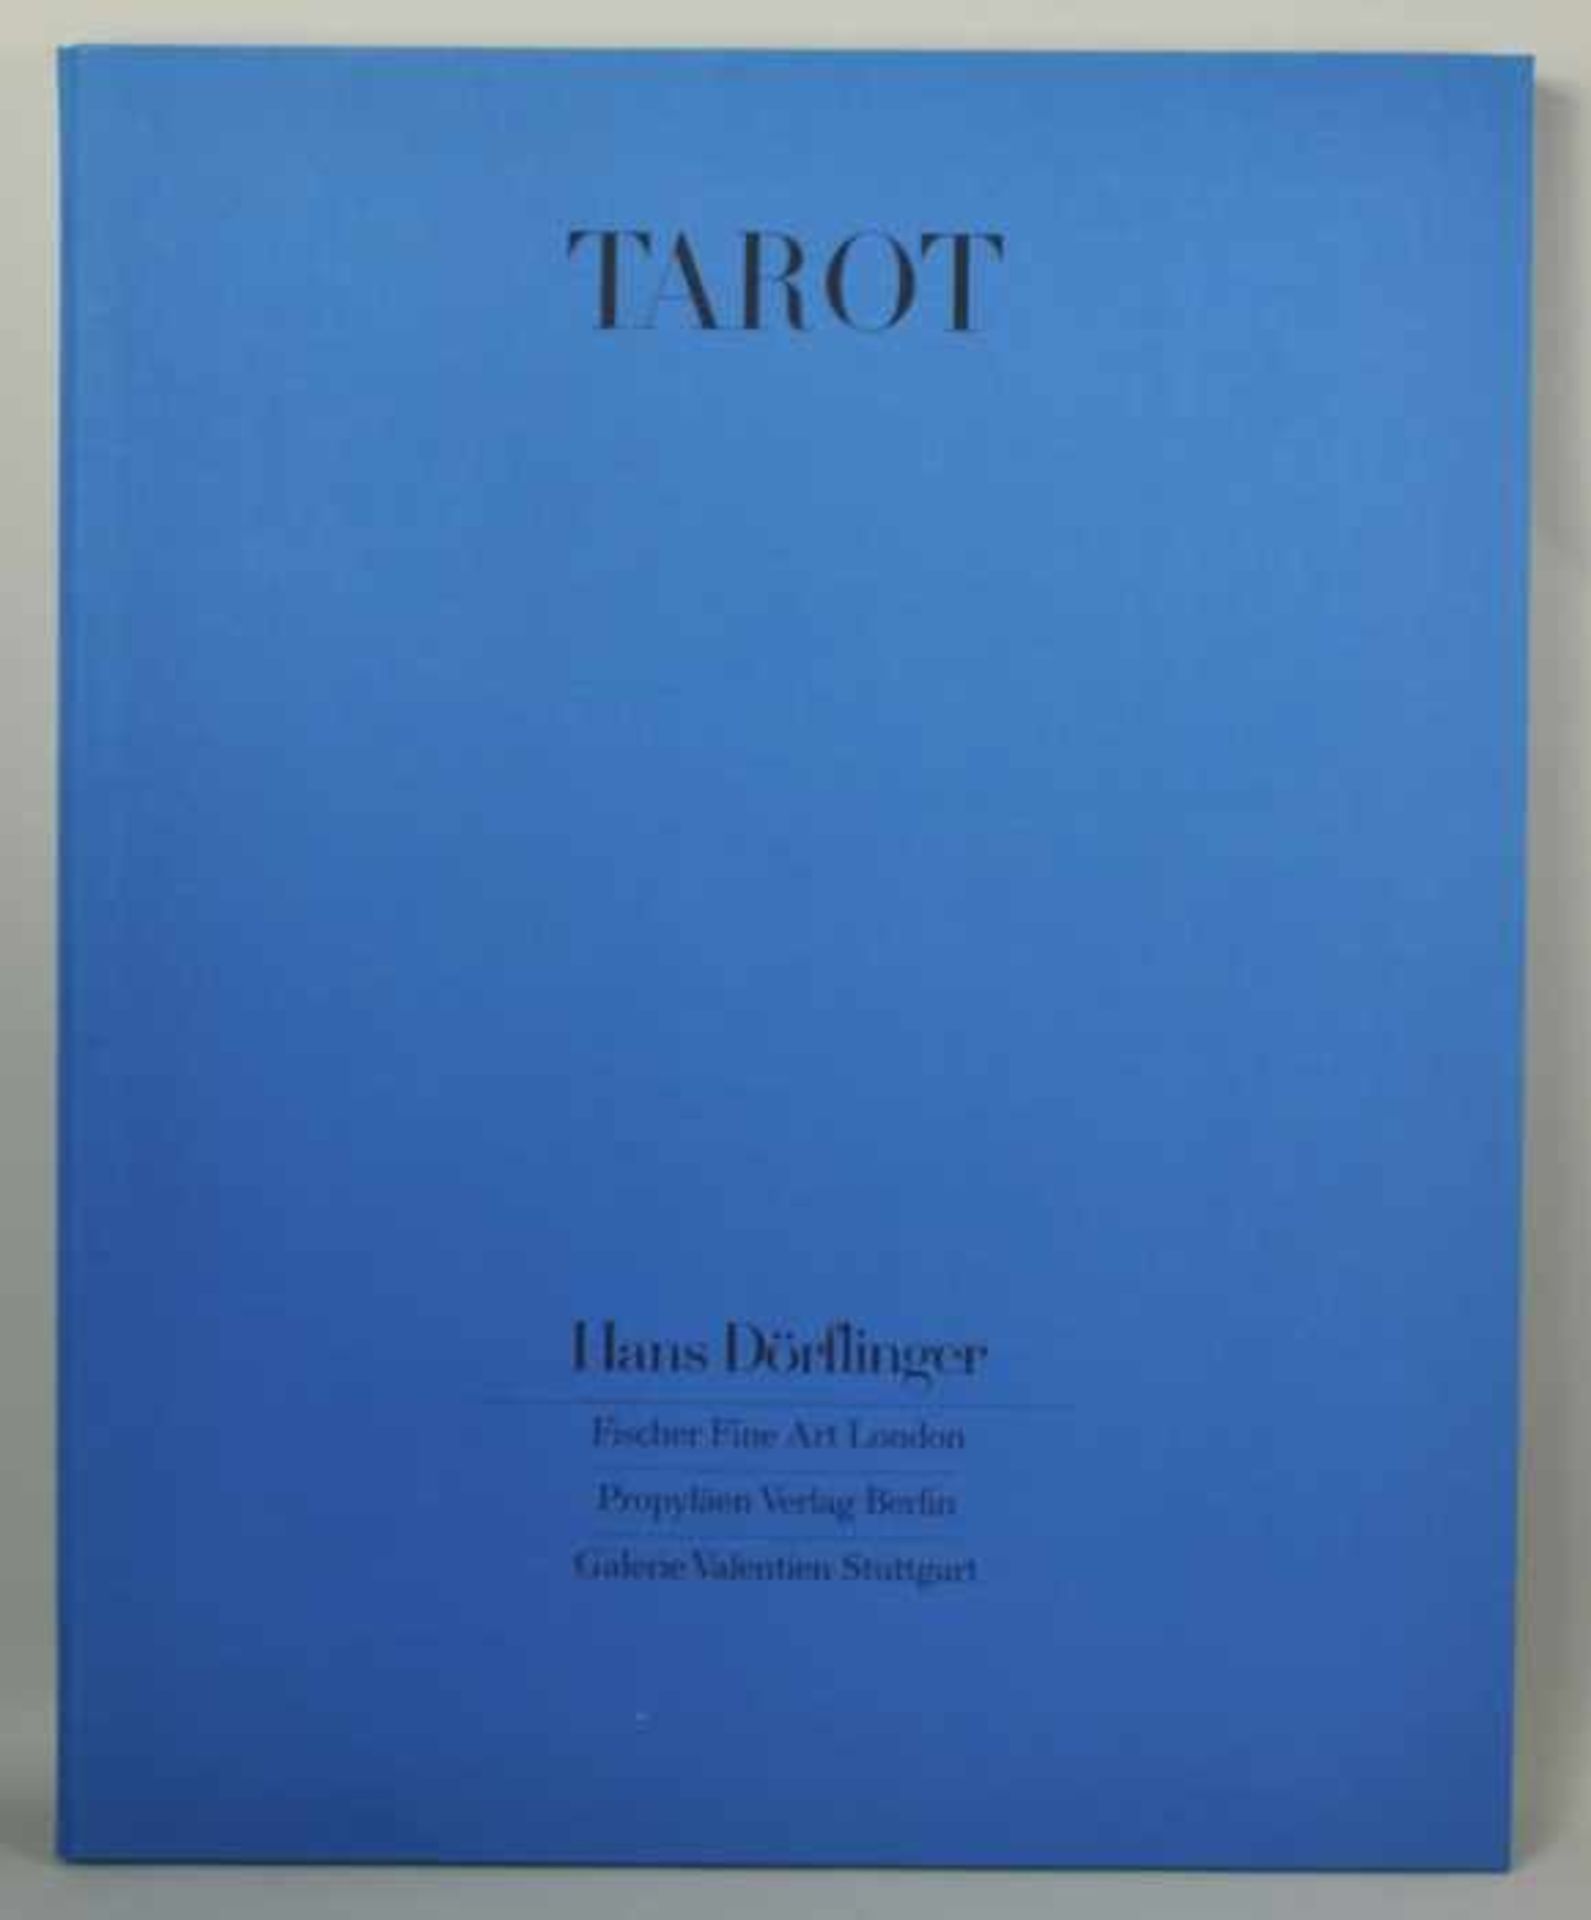 DÖRFLINGER Johannes (1941 Konstanz) "Tarot" groß, Mappe mit 22 Granolithographien auf Büttenpapier